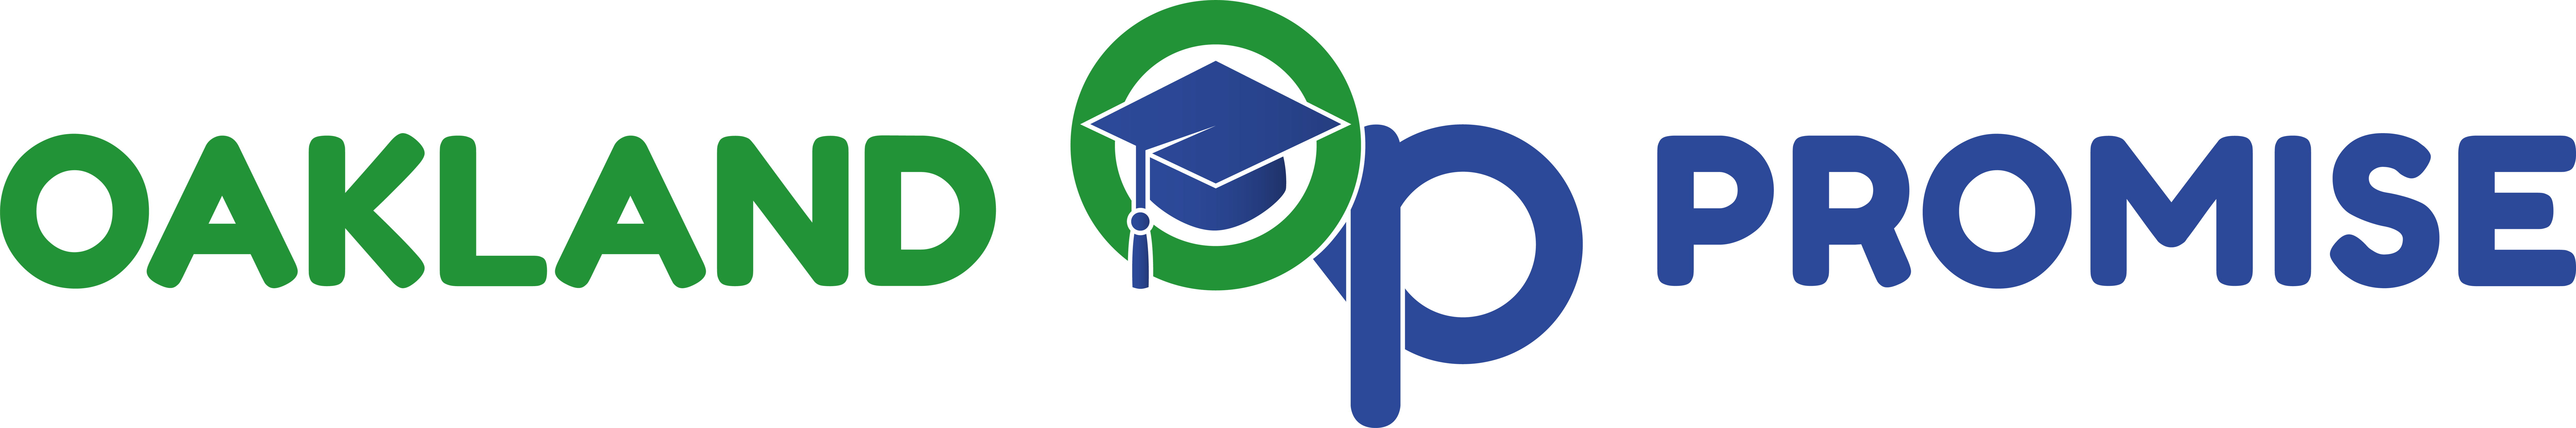 Oakland Promise Application Portal logo